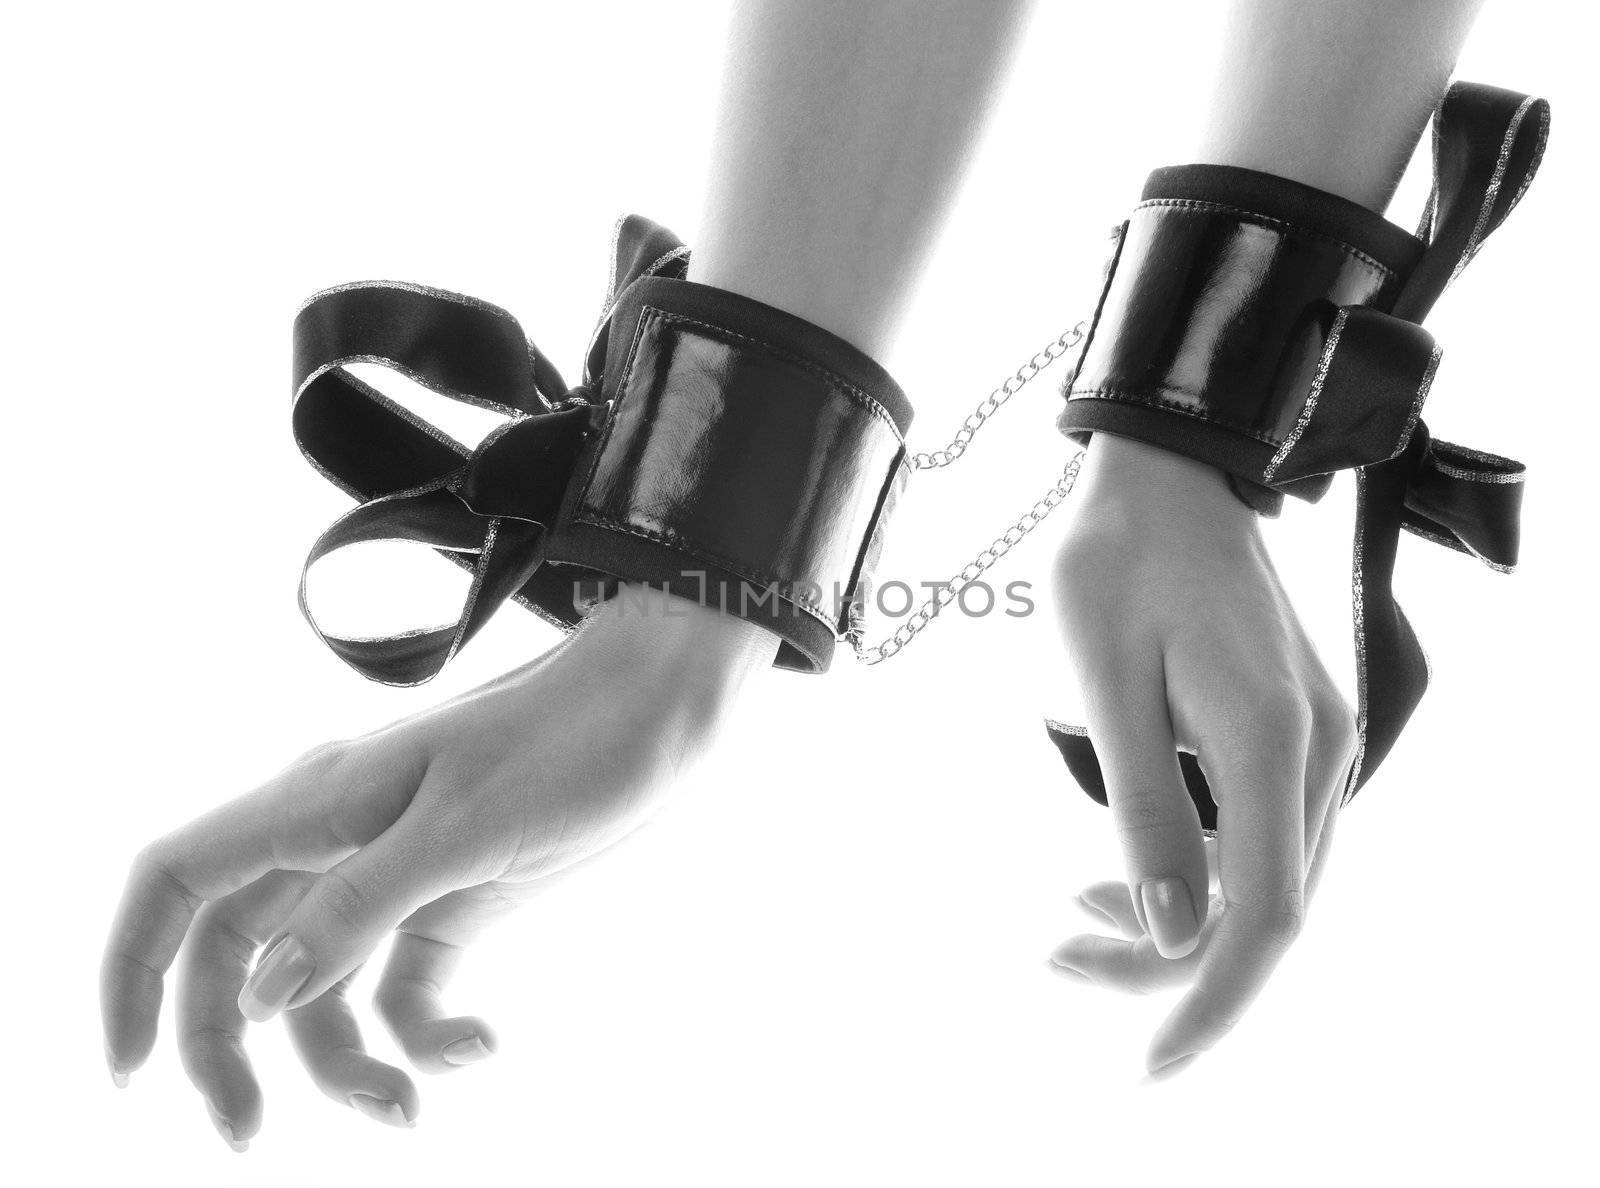 Handcuffs by mihhailov